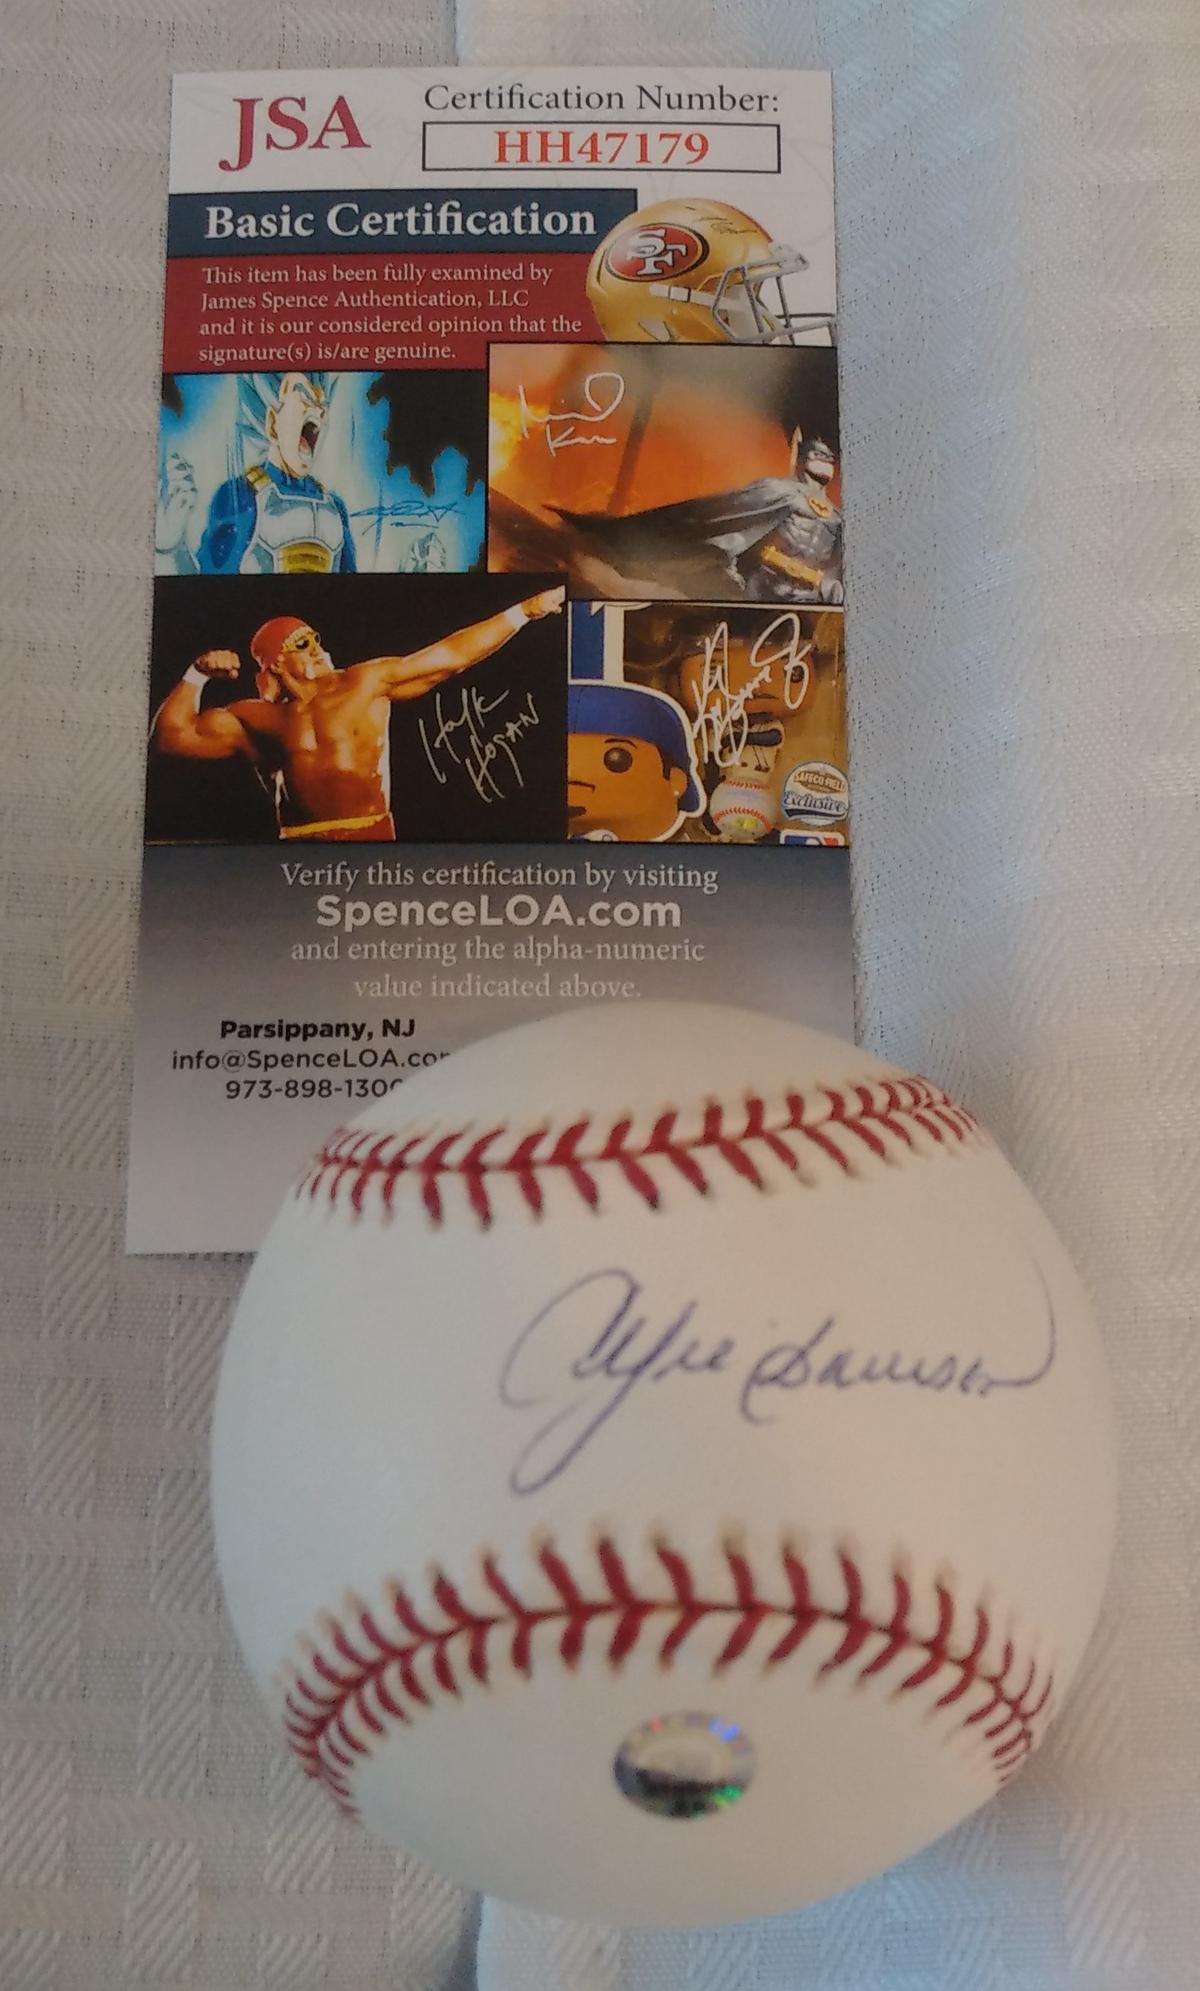 Andre Dawson Autographed Signed 2004 Opening Day Logo Baseball JSA COA Cubs Expos HOF Ball